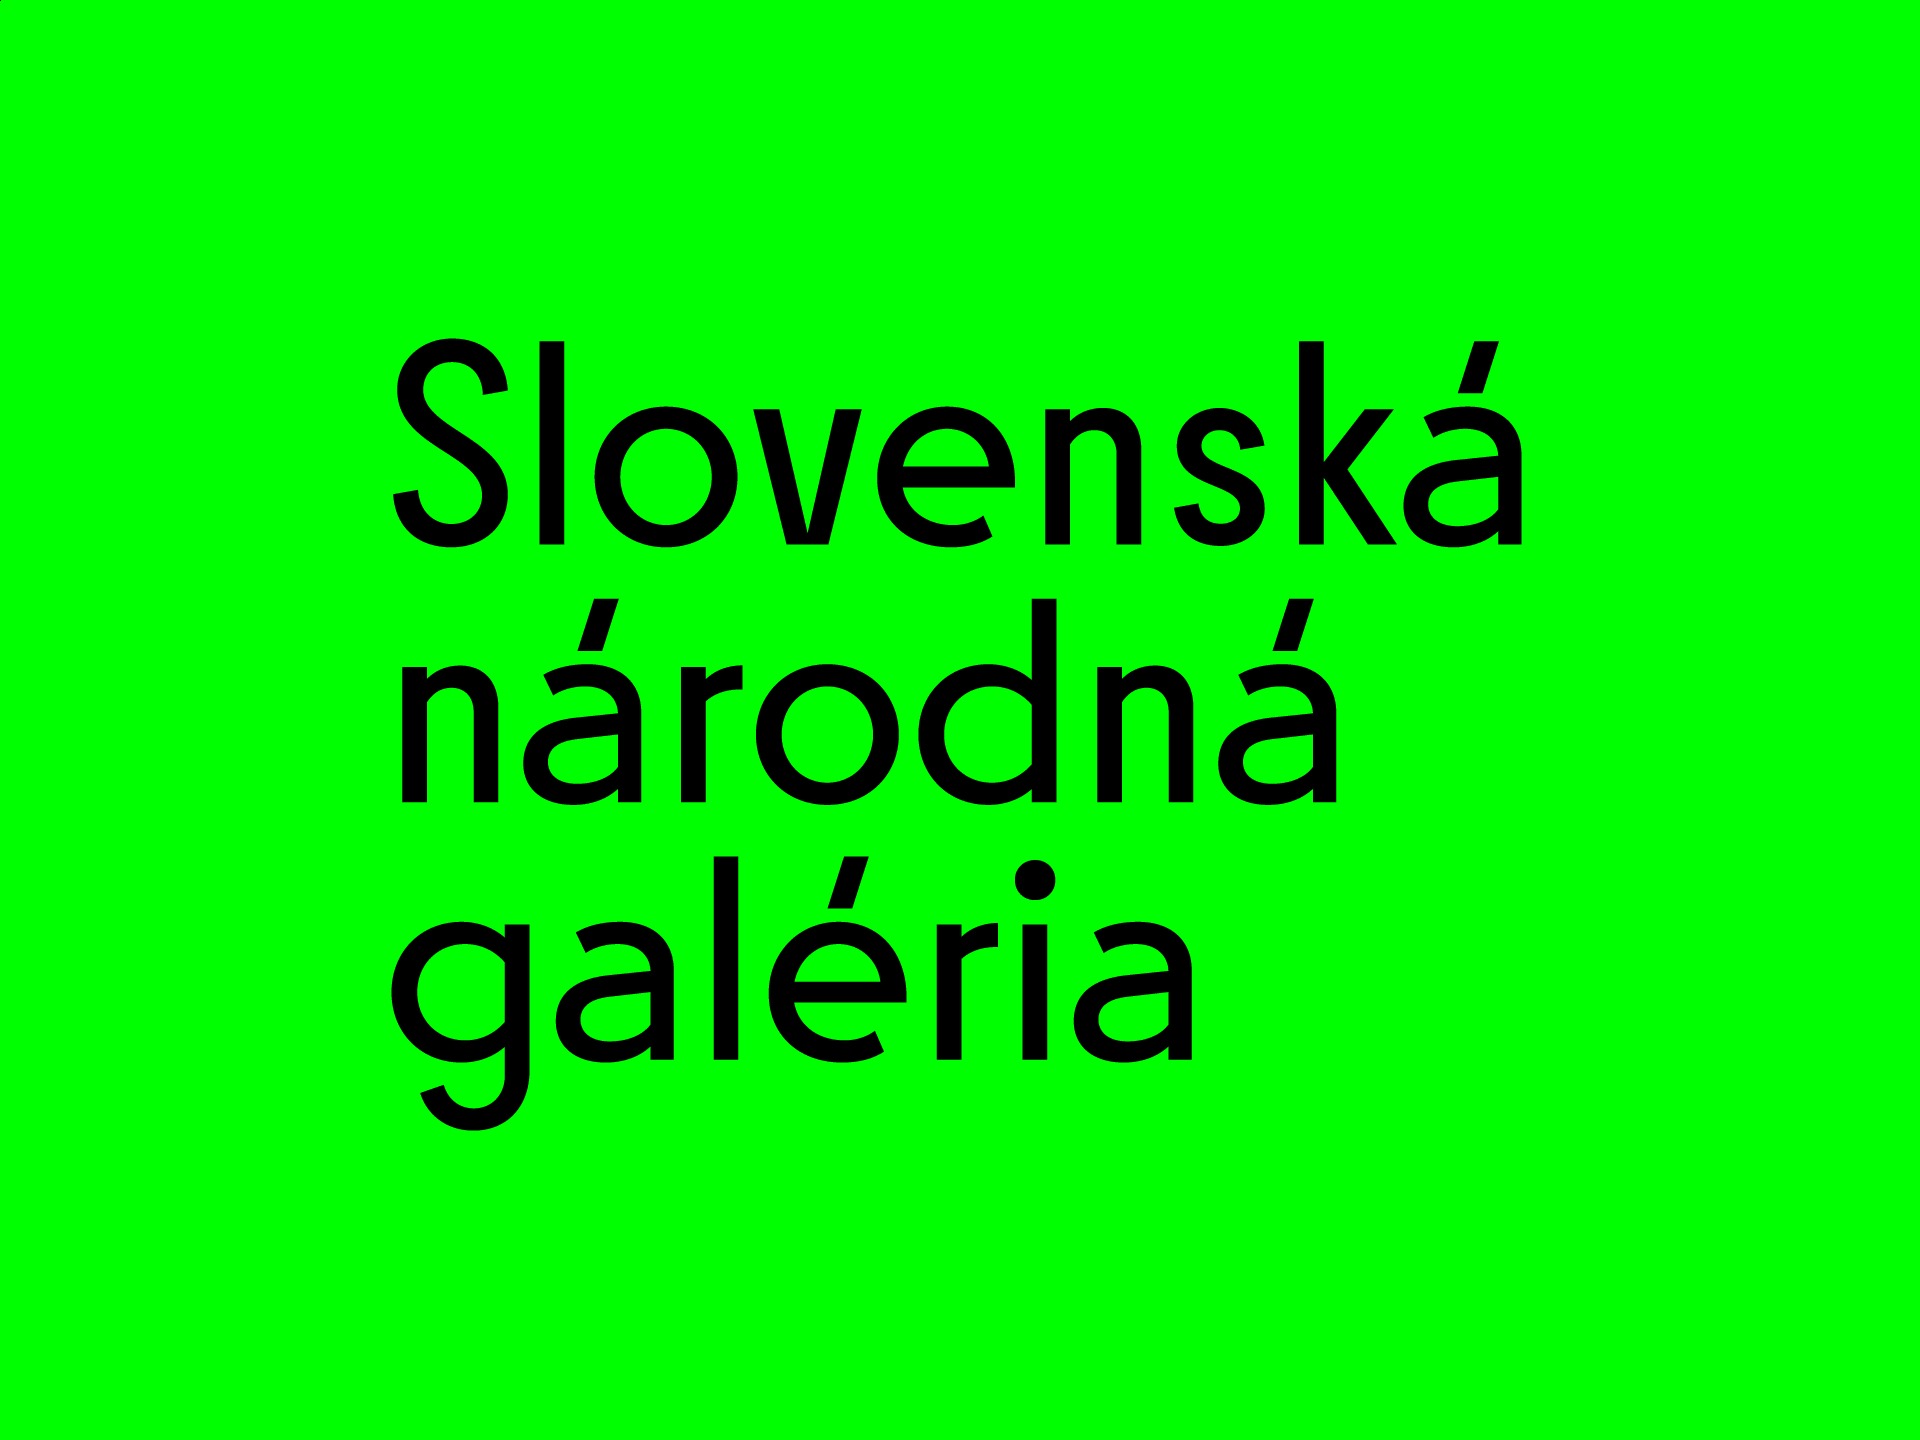 Custom Fonts: Slovak National Gallery